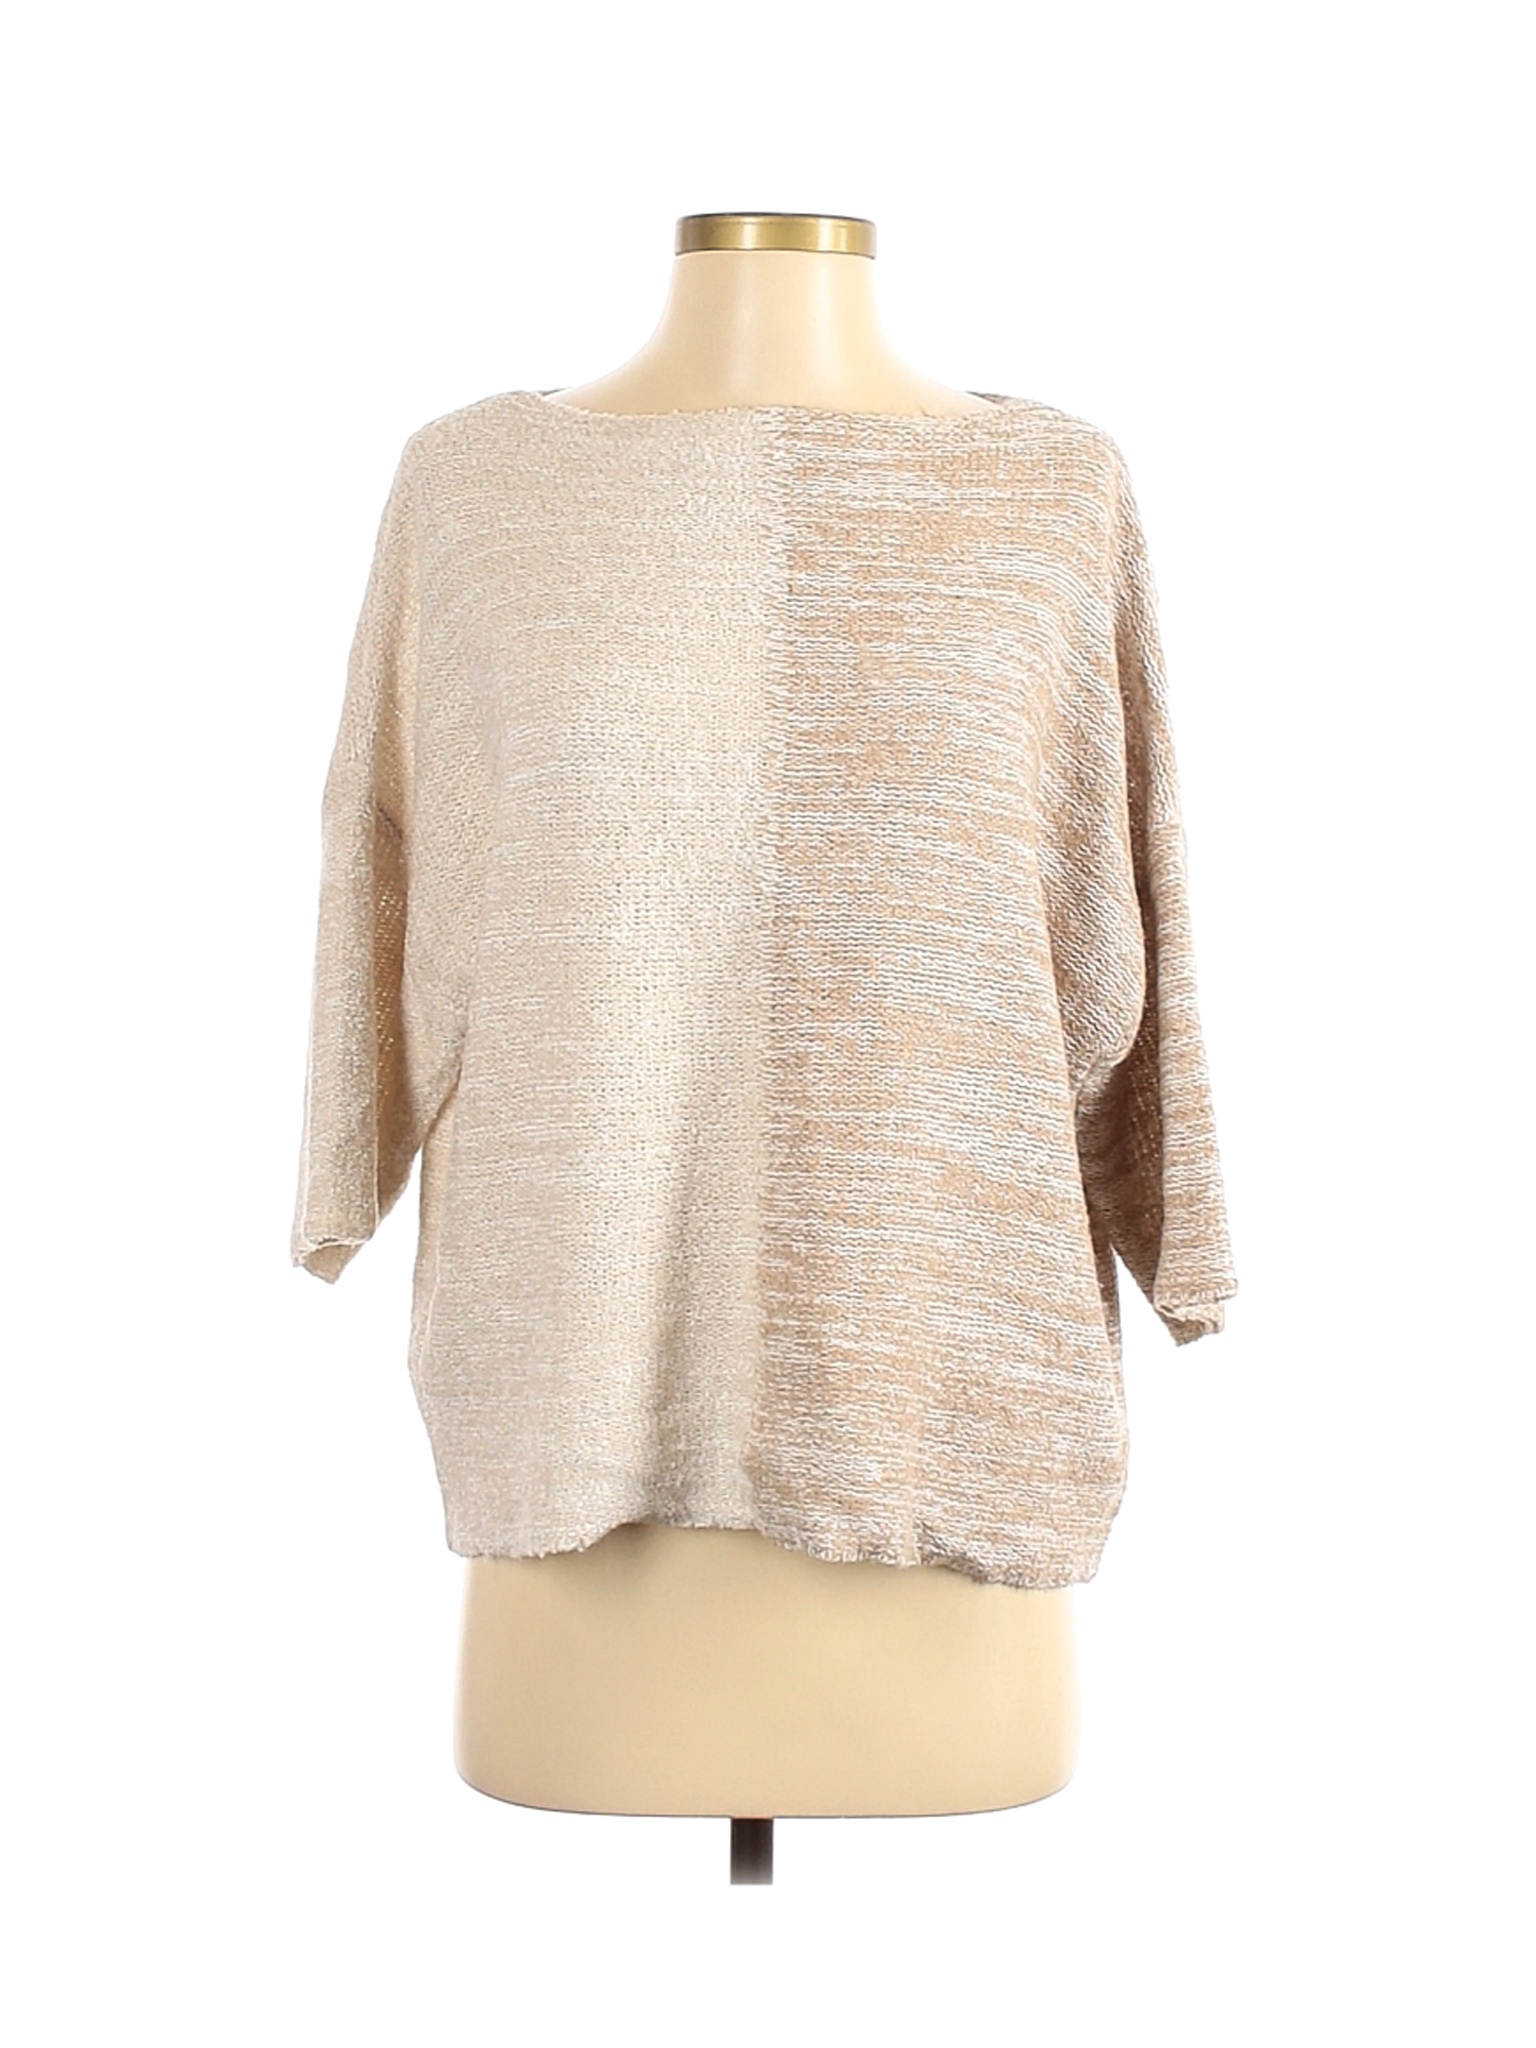 John Paul Richard Women Brown Pullover Sweater S | eBay